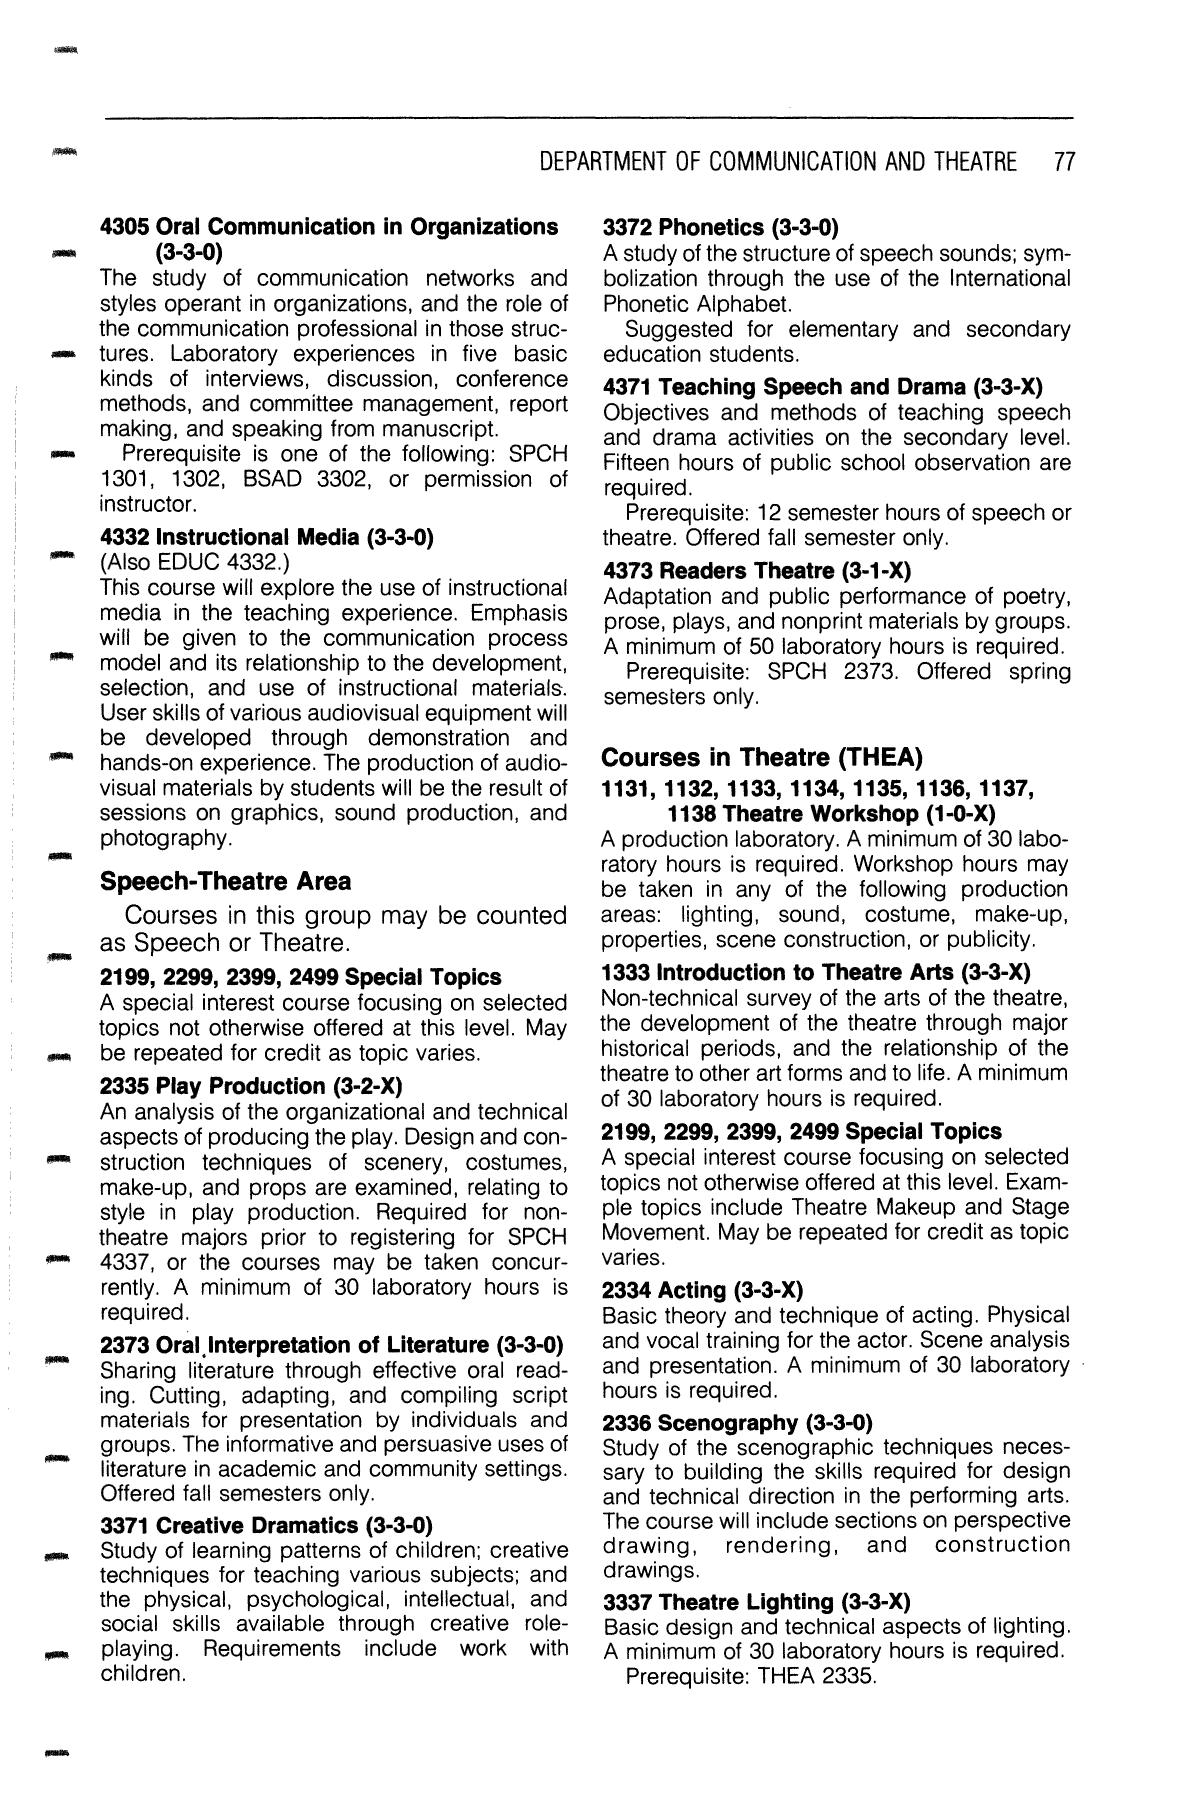 Catalog of Hardin-Simmons University, 1985-1986 Undergraduate Bulletin
                                                
                                                    77
                                                